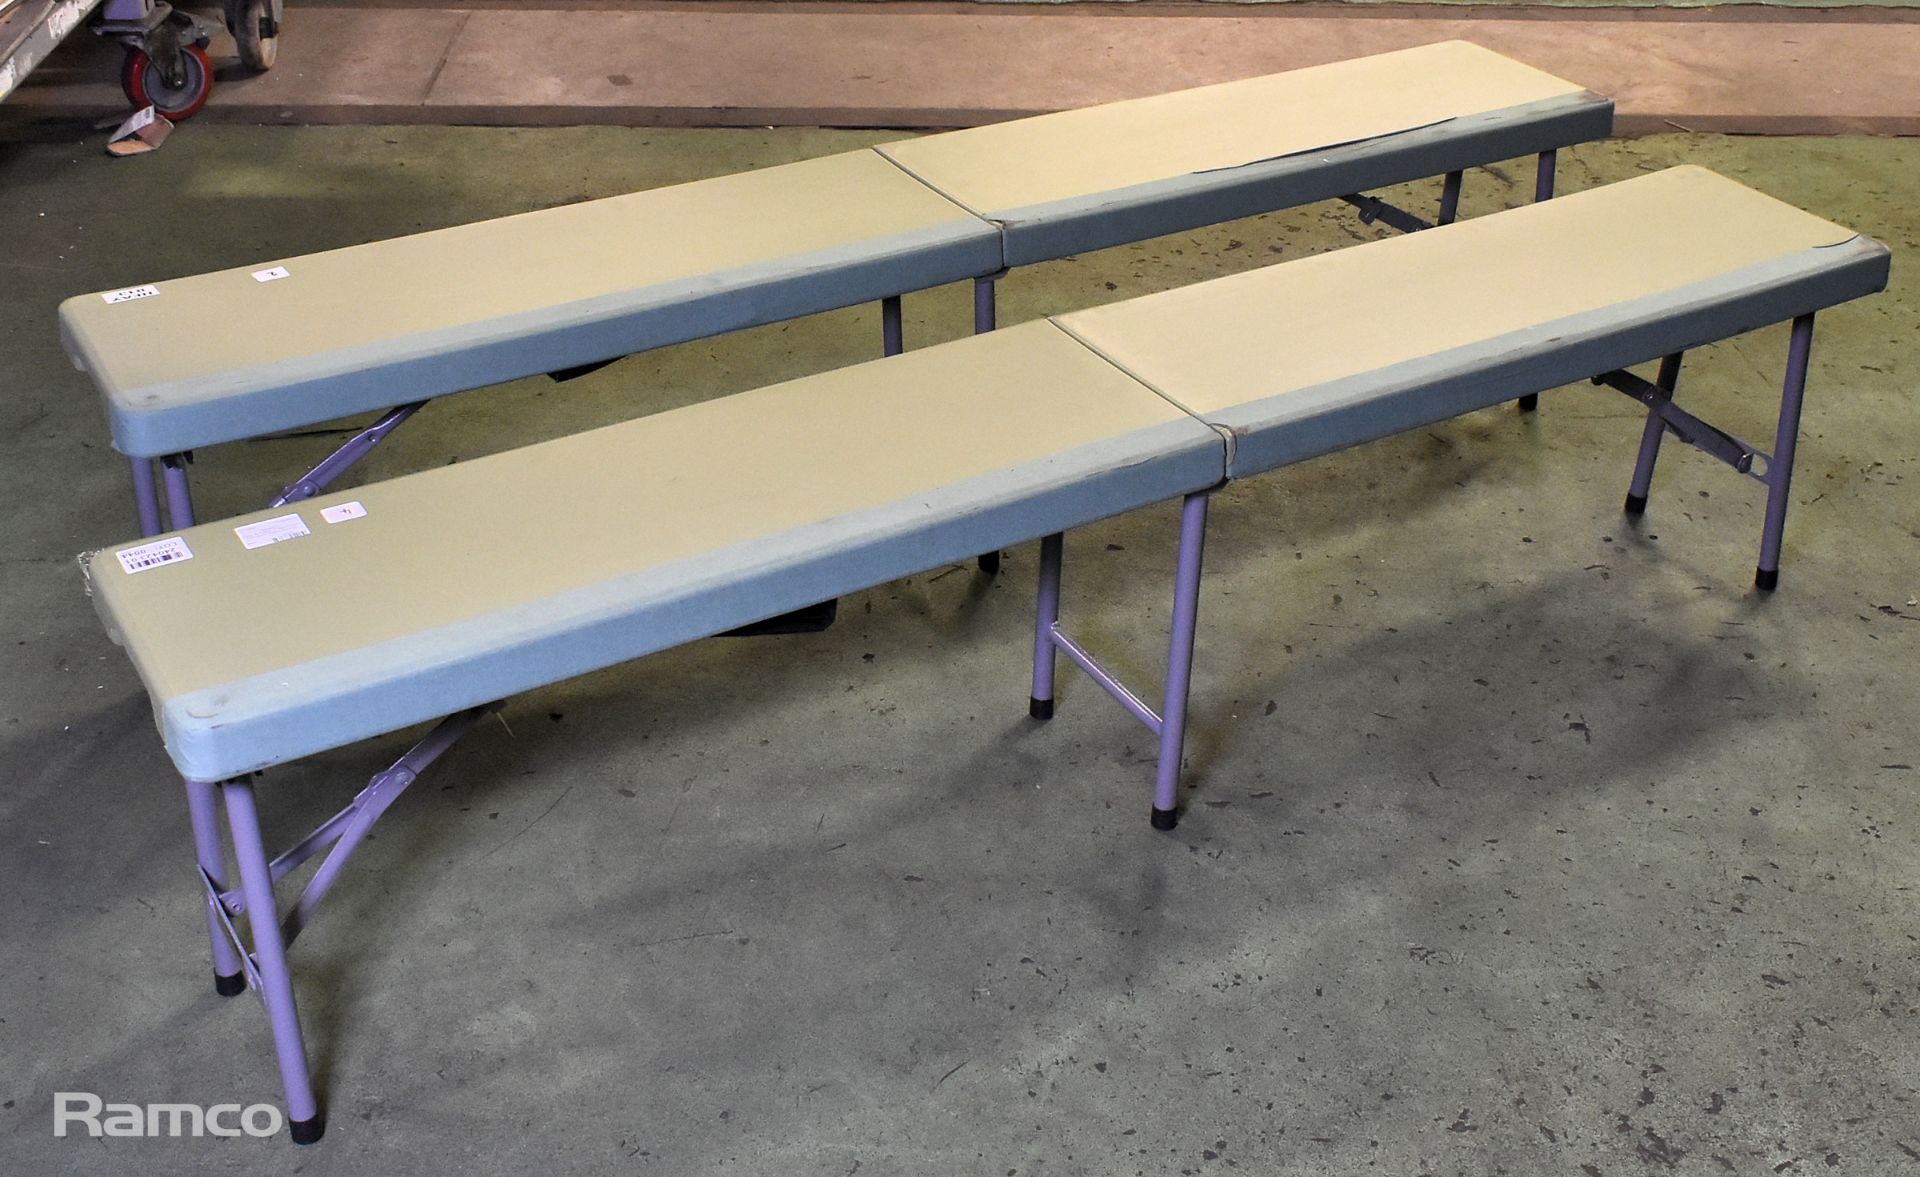 2x army folding benches - dimensions: L 1820 x W 300 x H 440mm